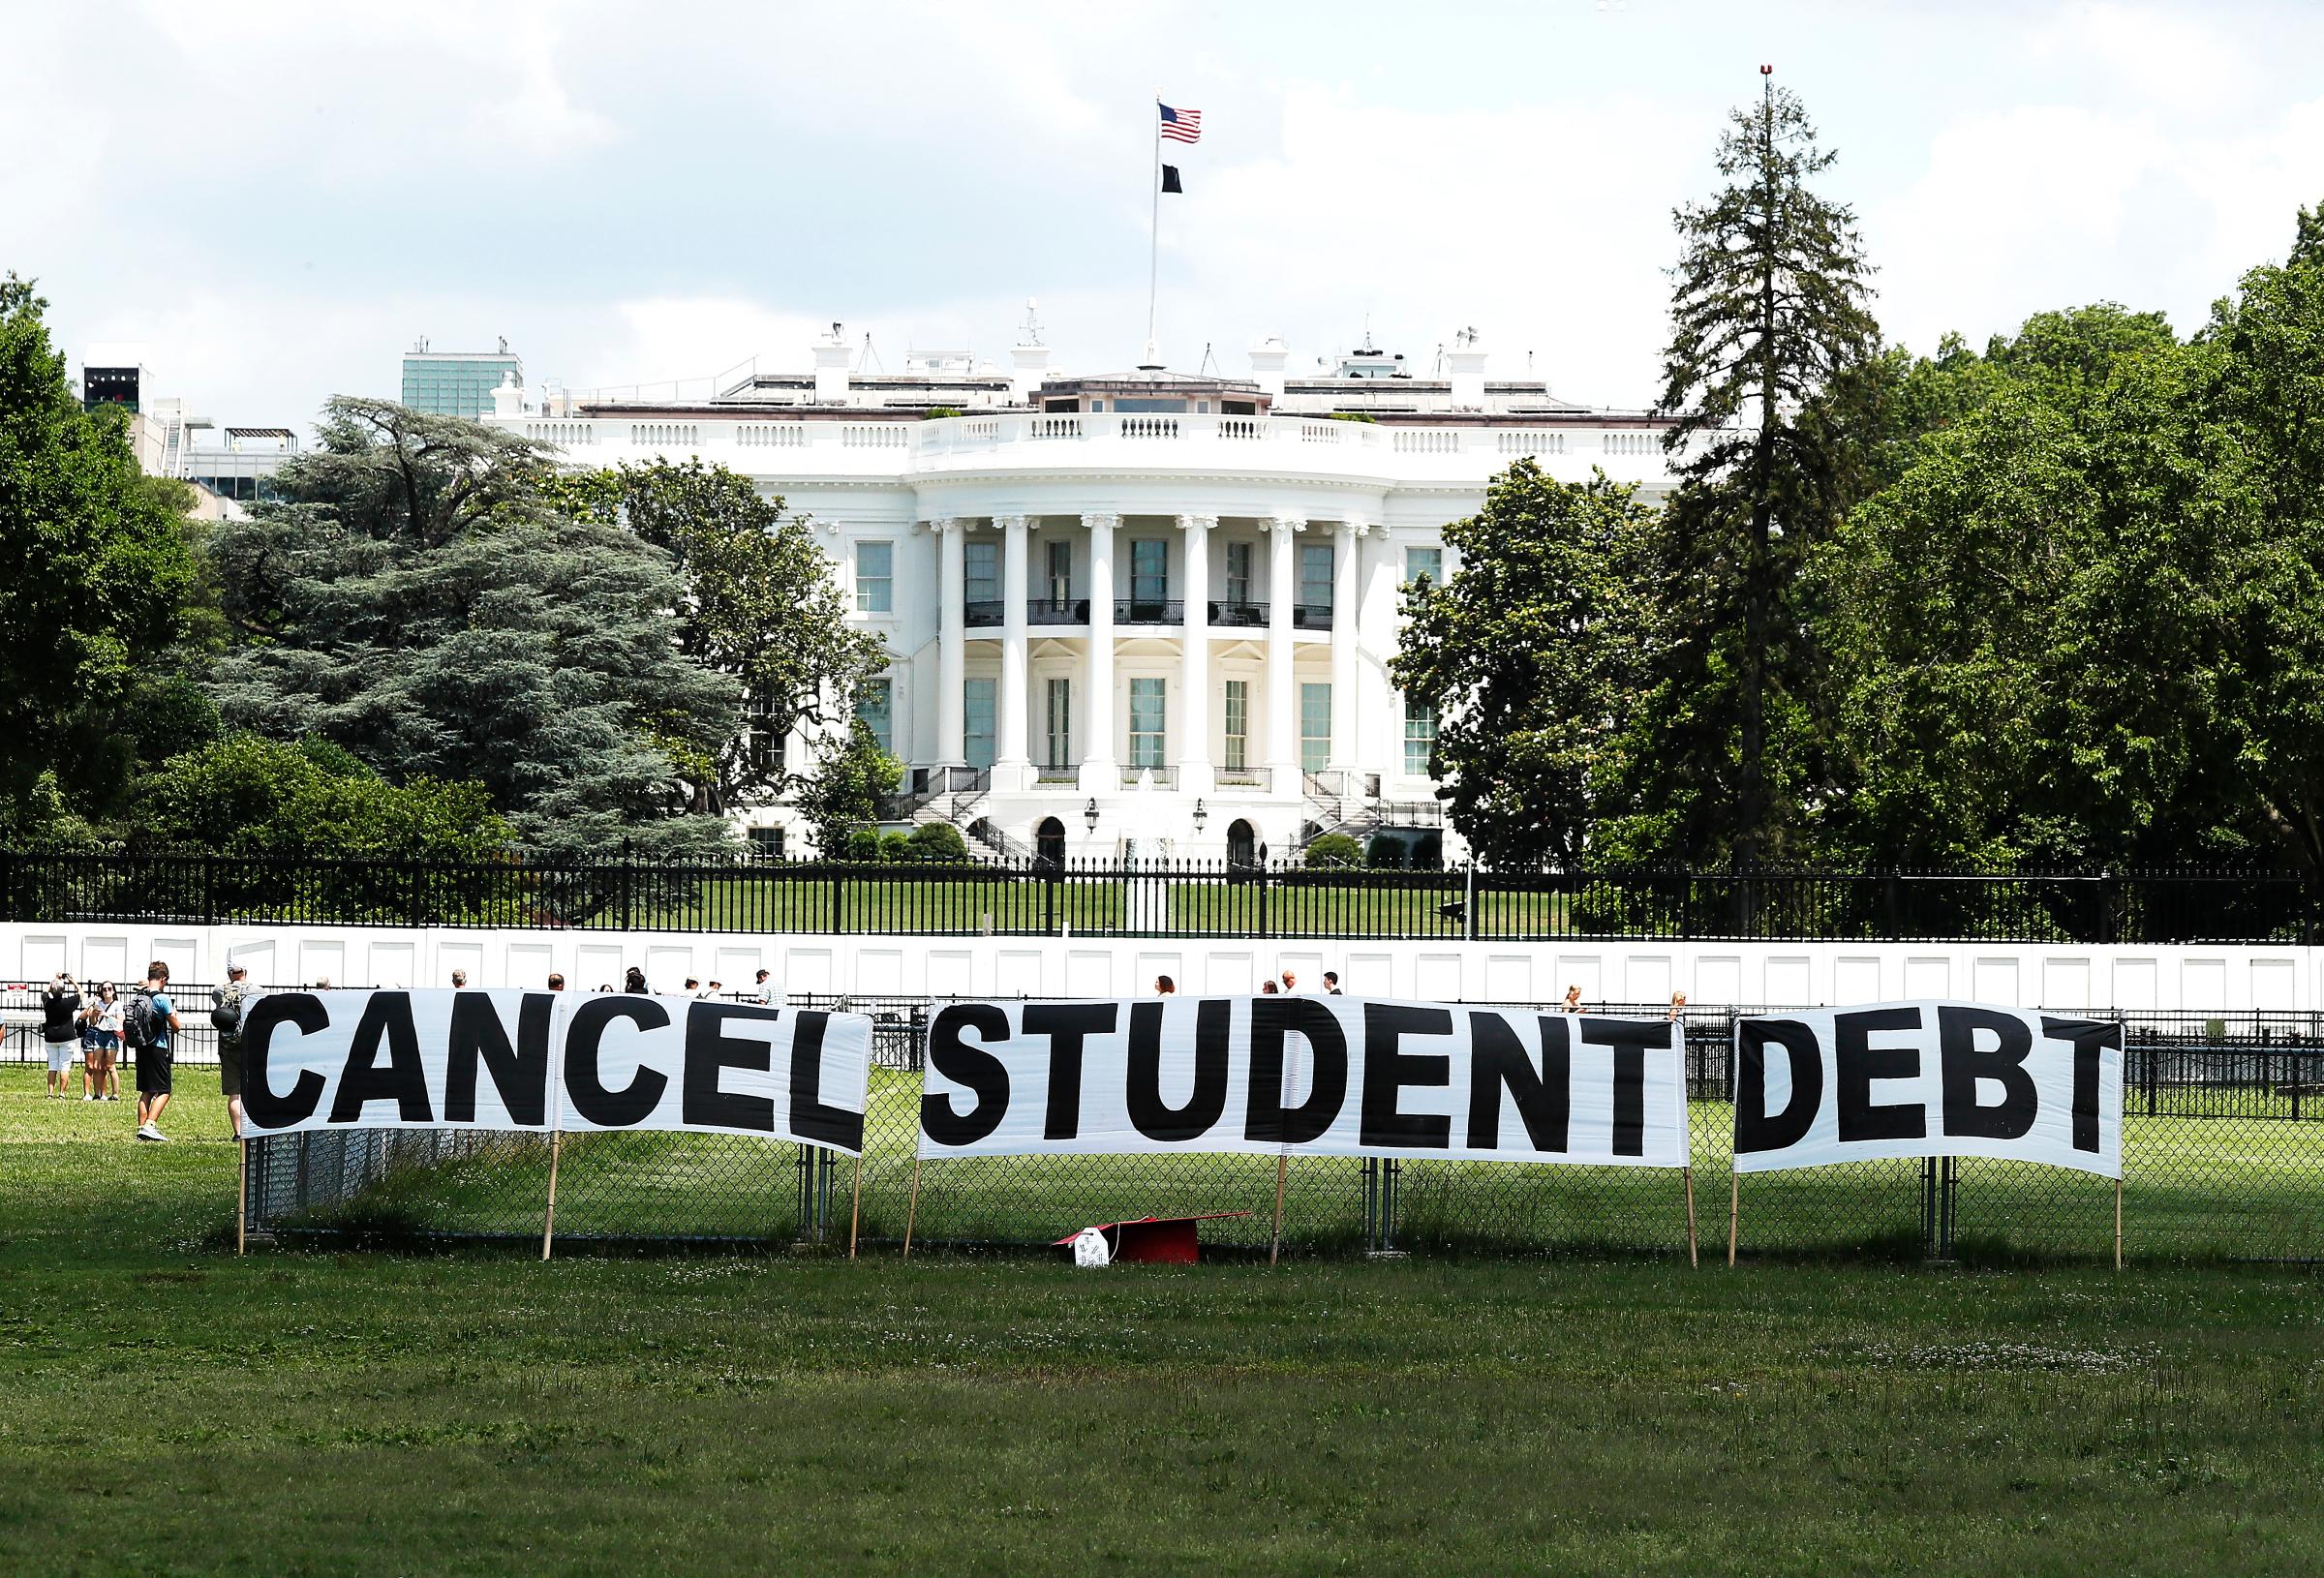 Student debt protest